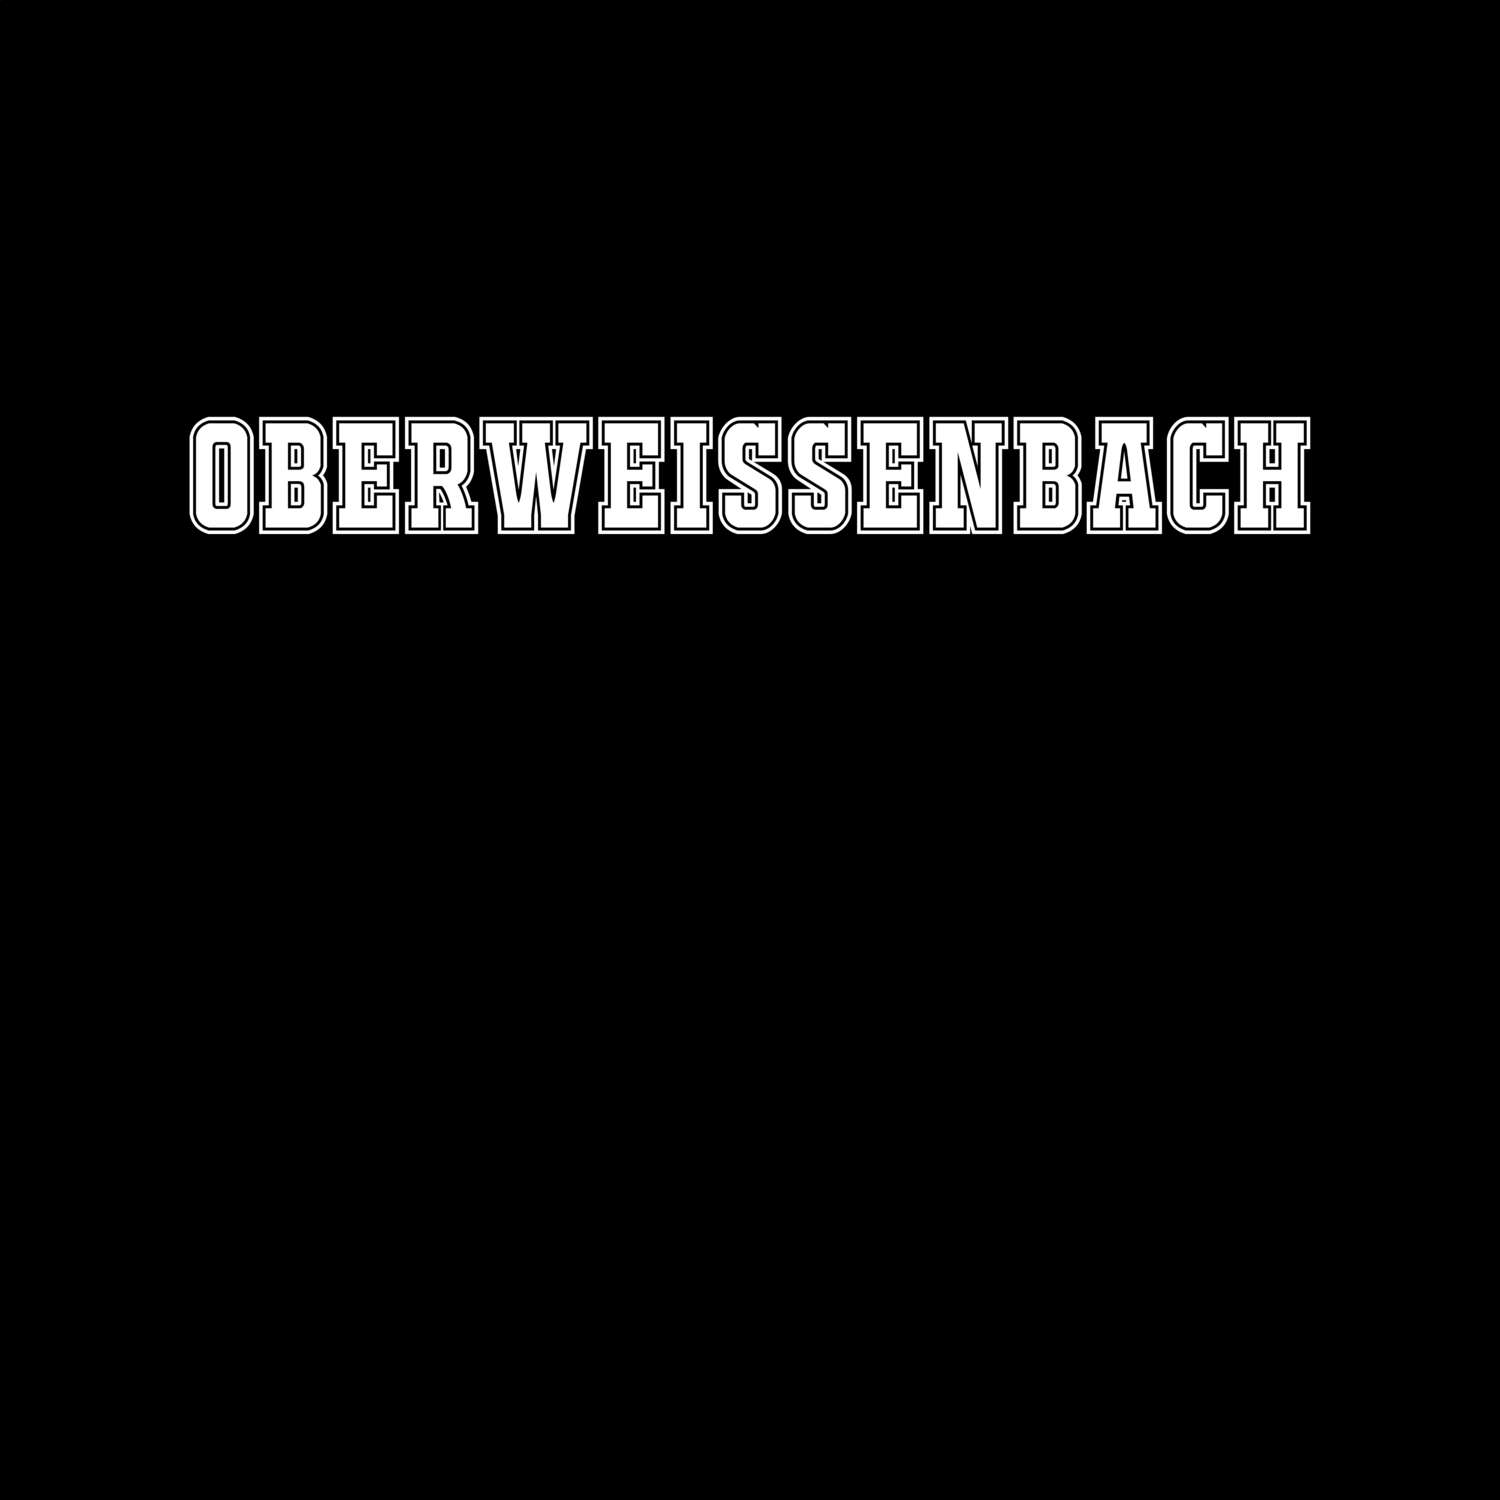 Oberweißenbach T-Shirt »Classic«